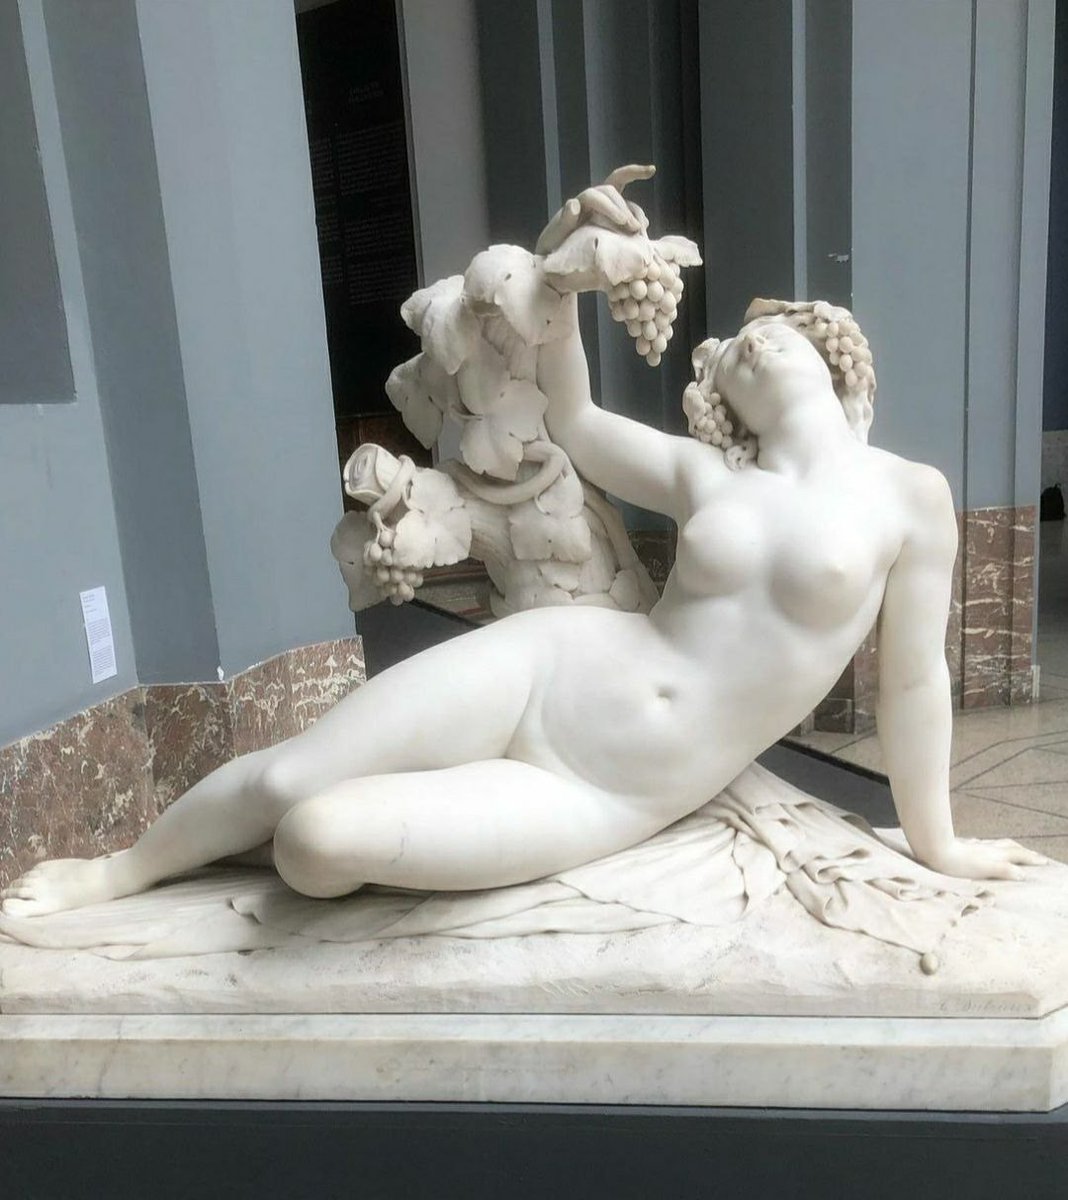 French sculptor Amable Dutrieux (1816-1886)
'Bacchante'
______
Museum of Fine Arts in Tournai #Belgium. 
📷 Roderick Lonsdale #Sculpture